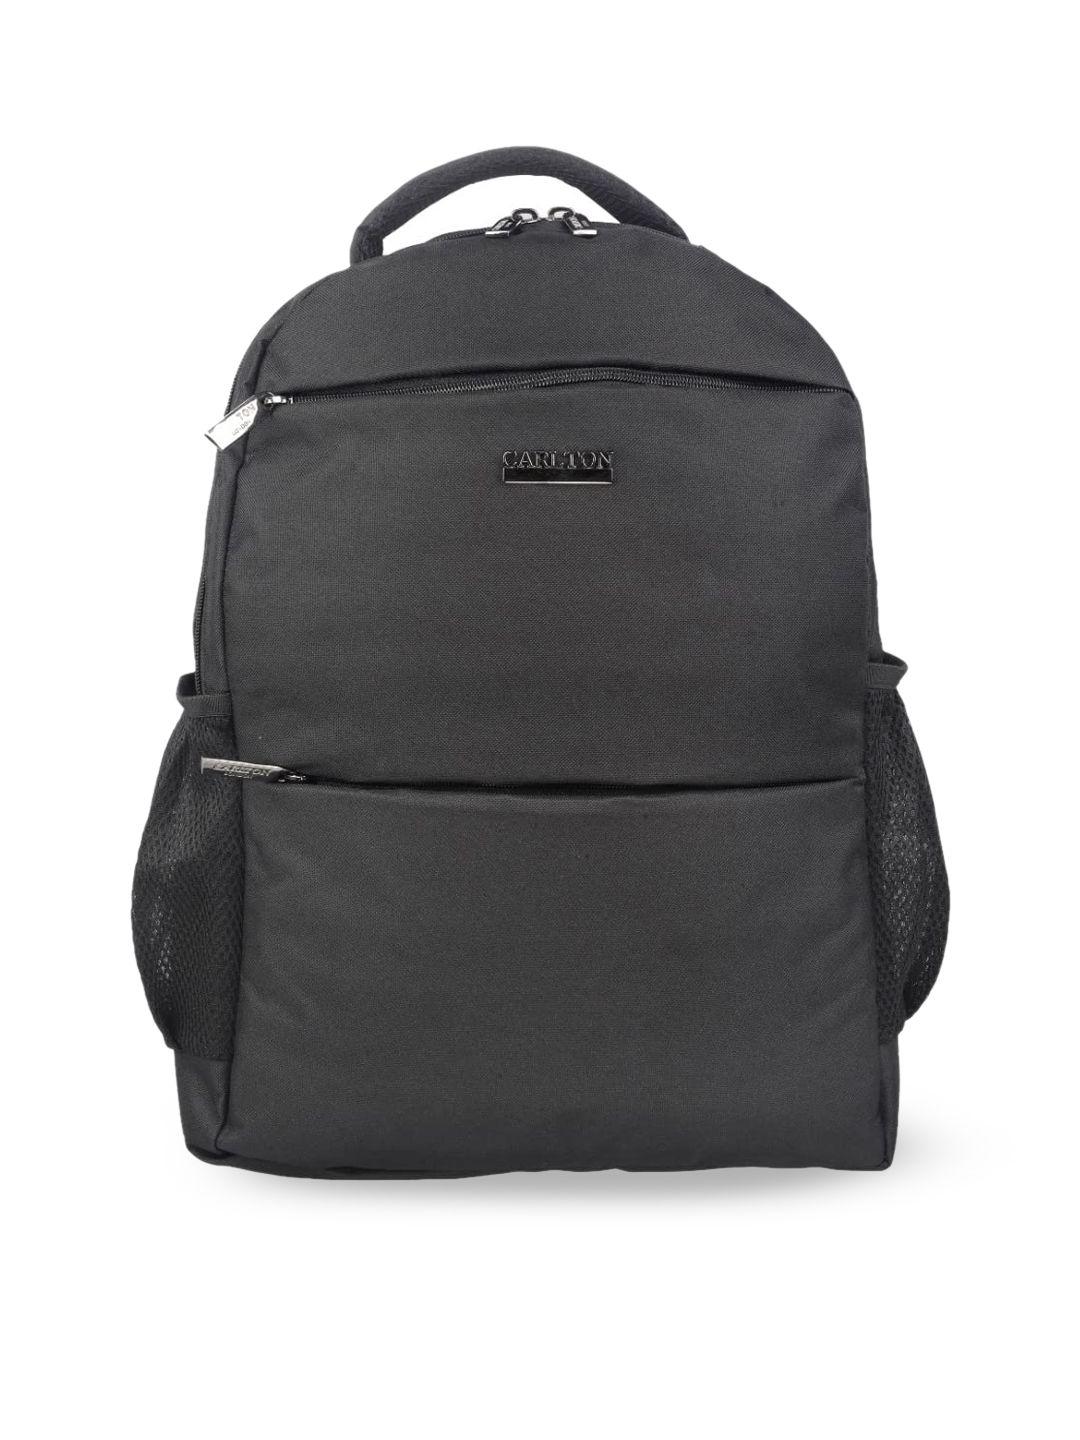 carlton london unisex black backpack 23 litres